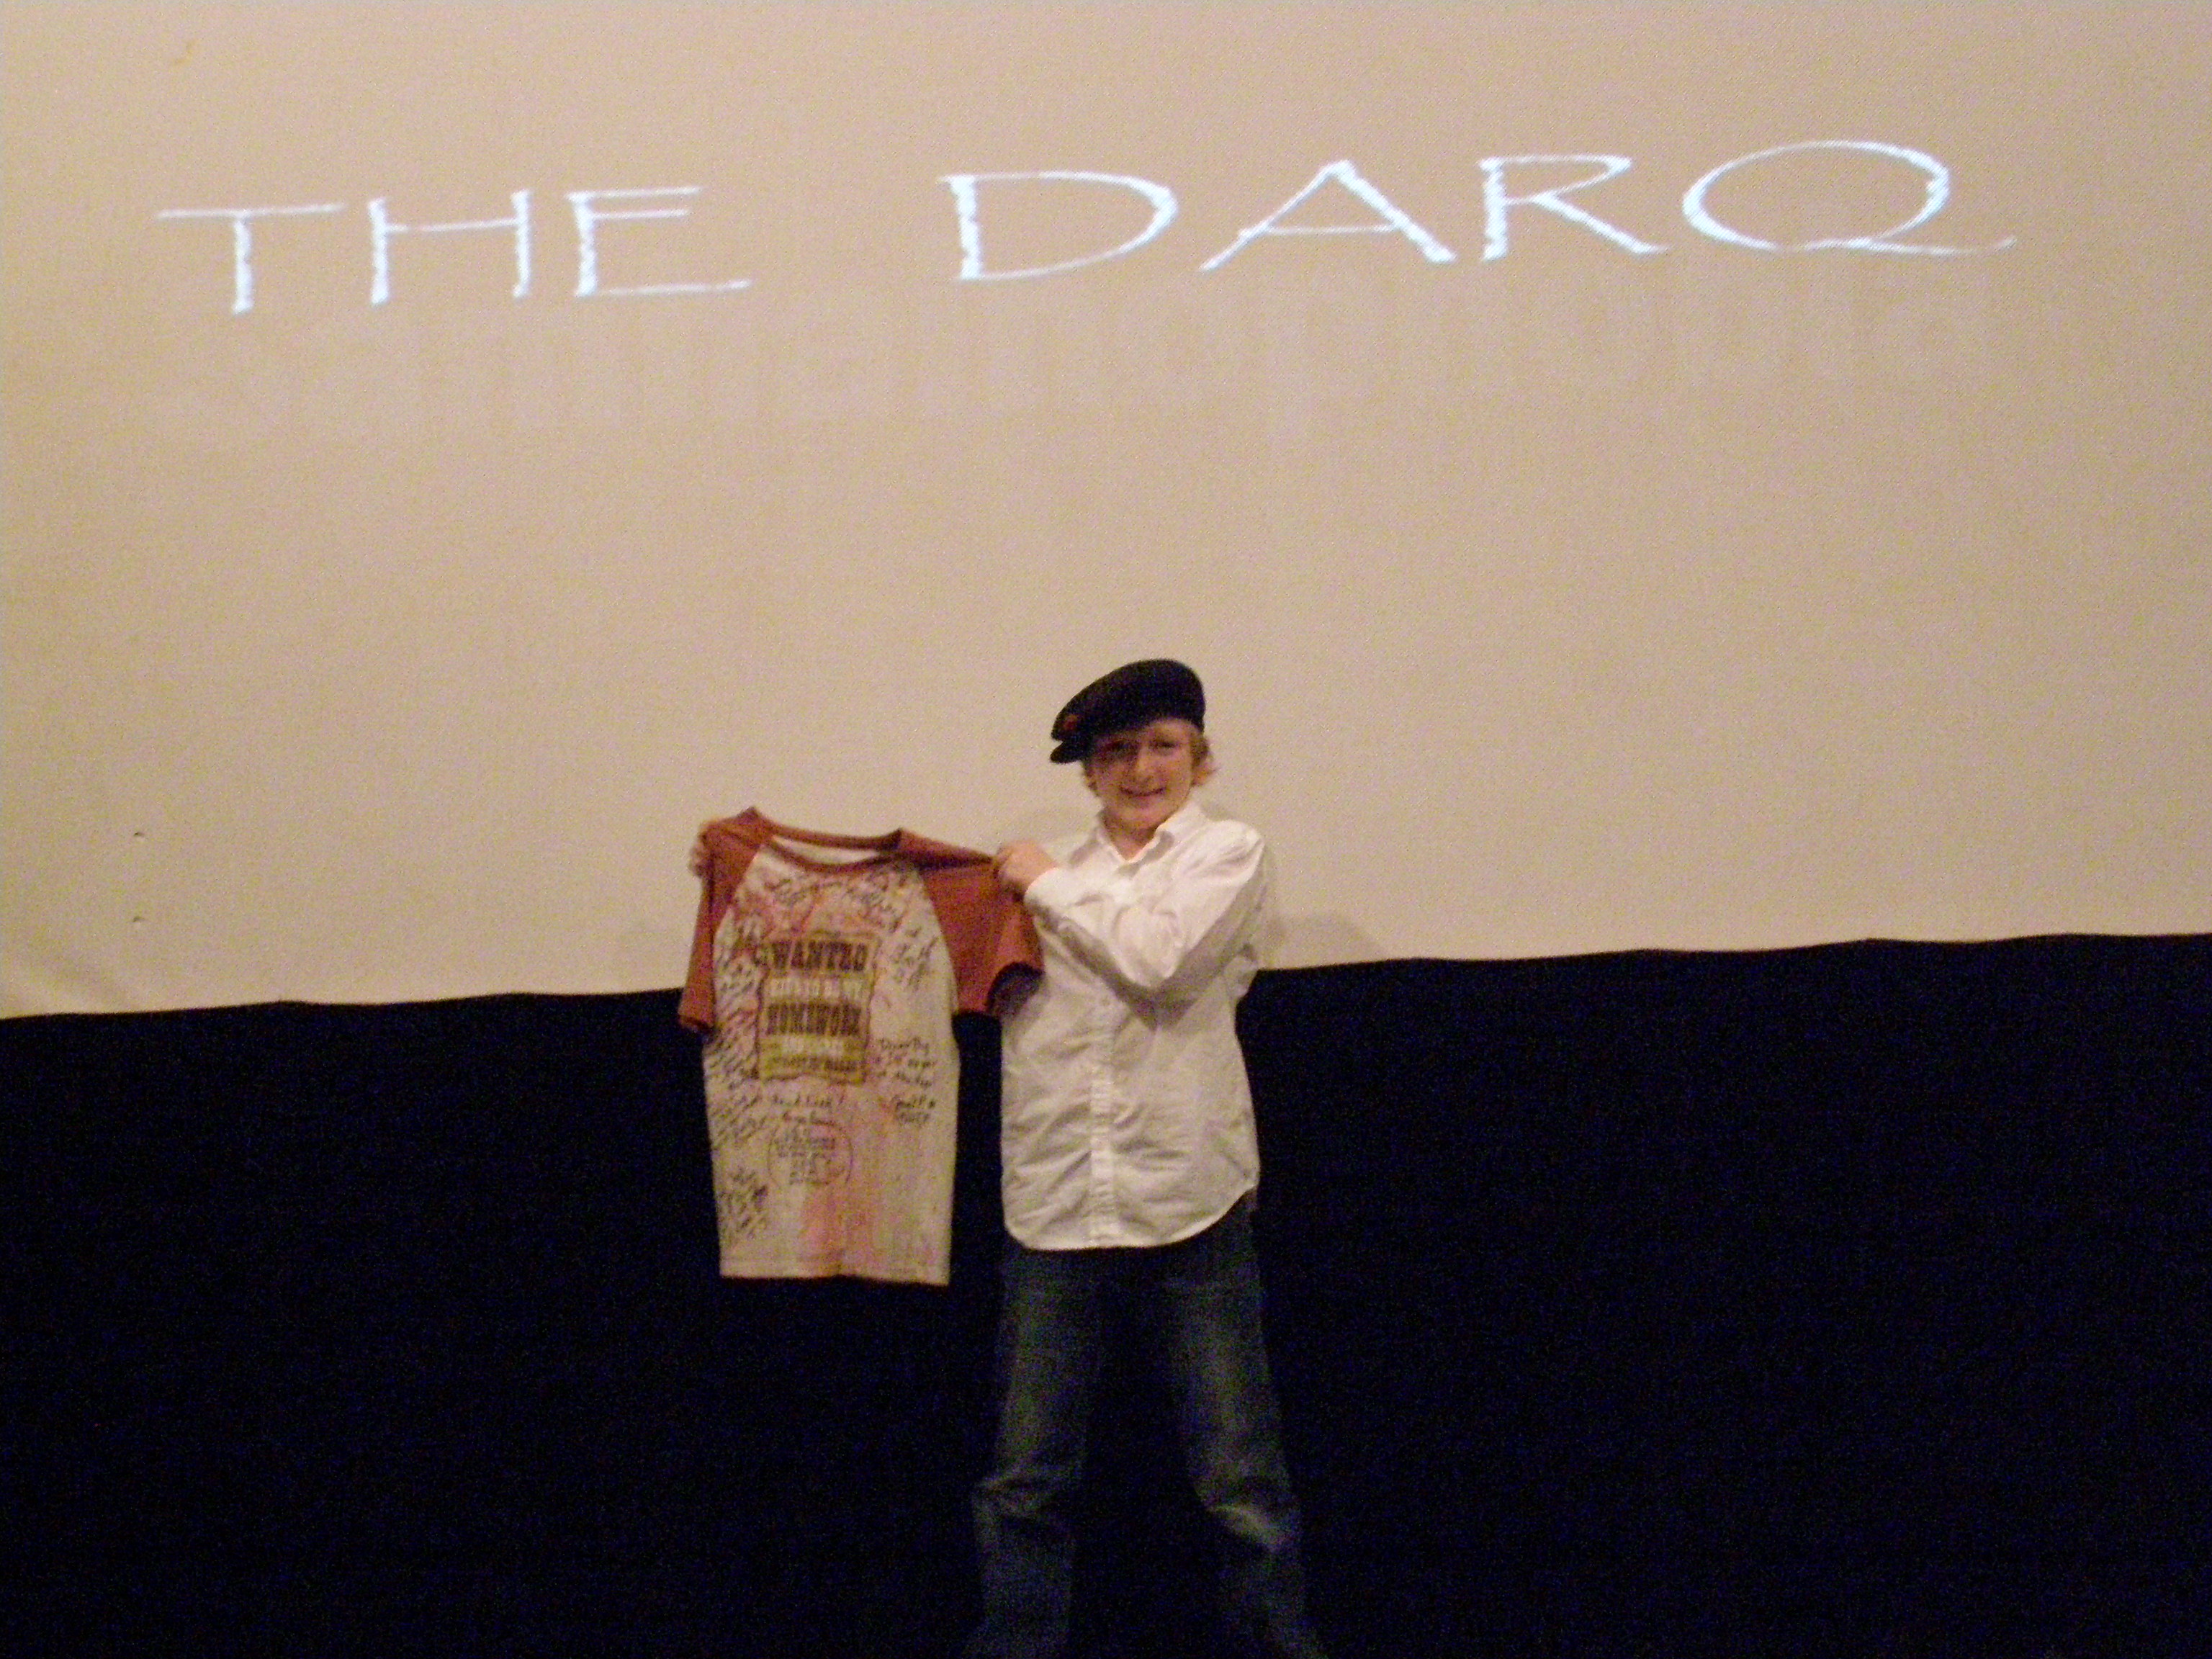 The Darq Movie Premiere